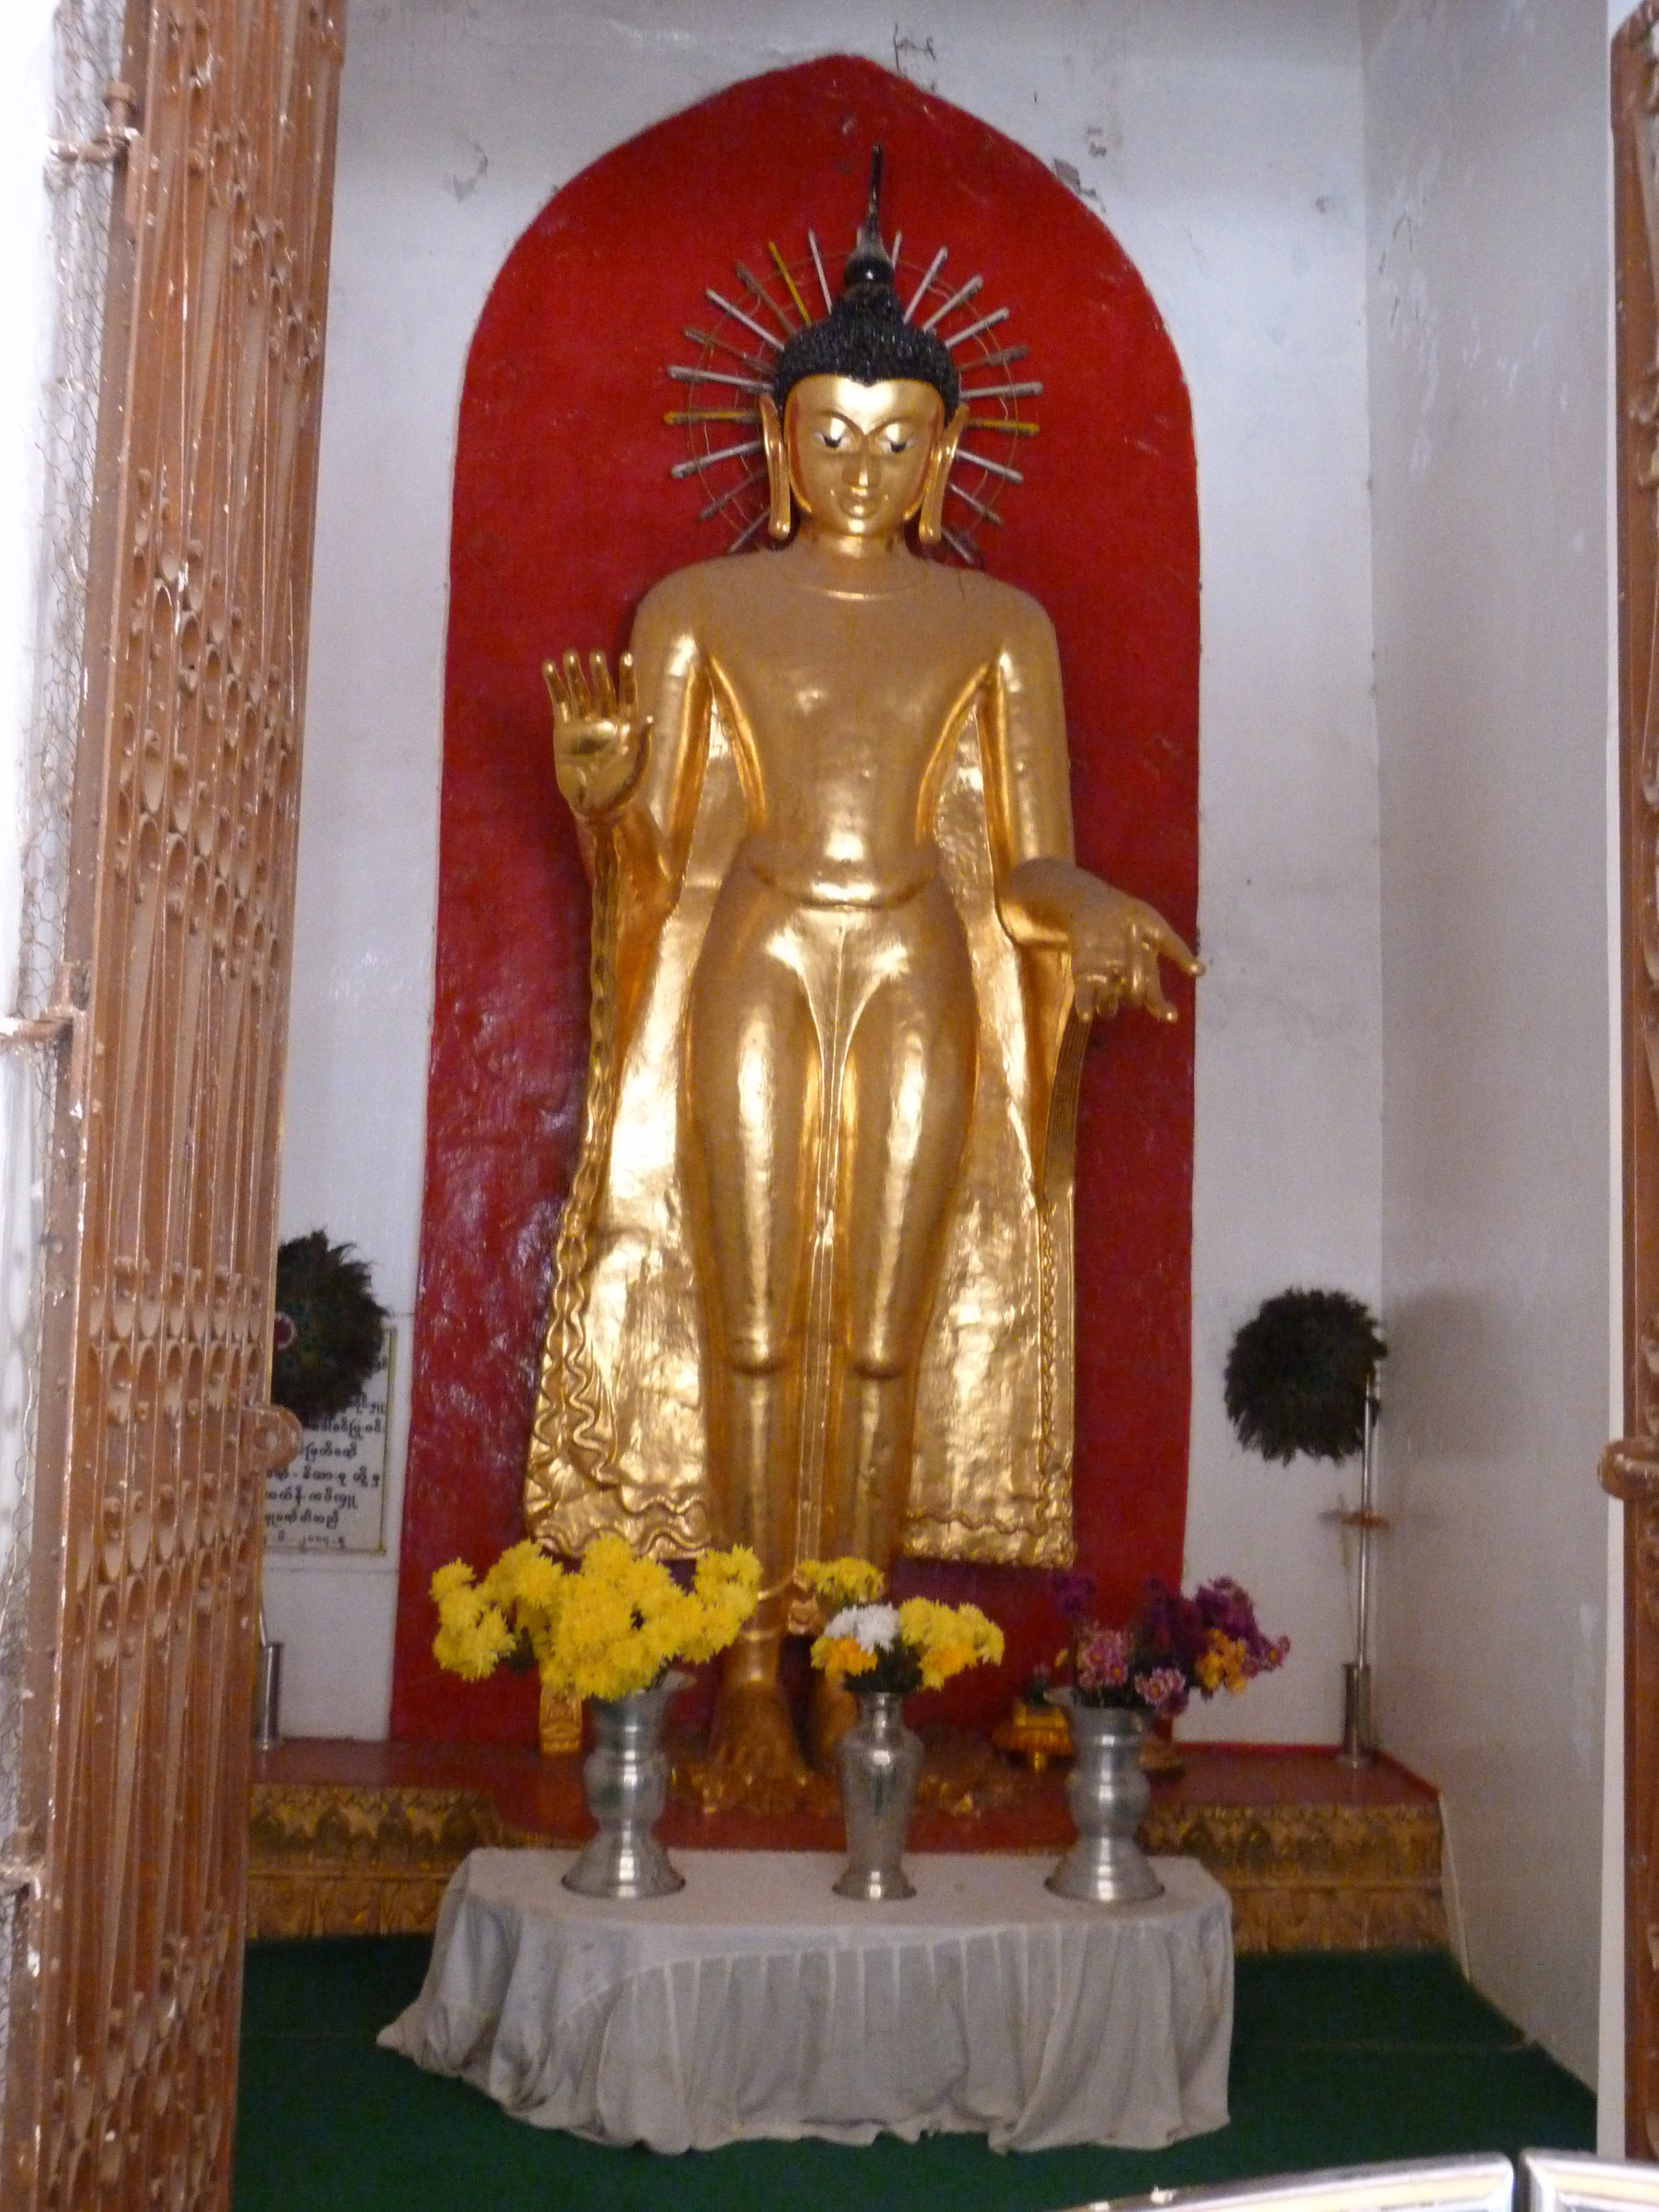 Standing Golden Buddha